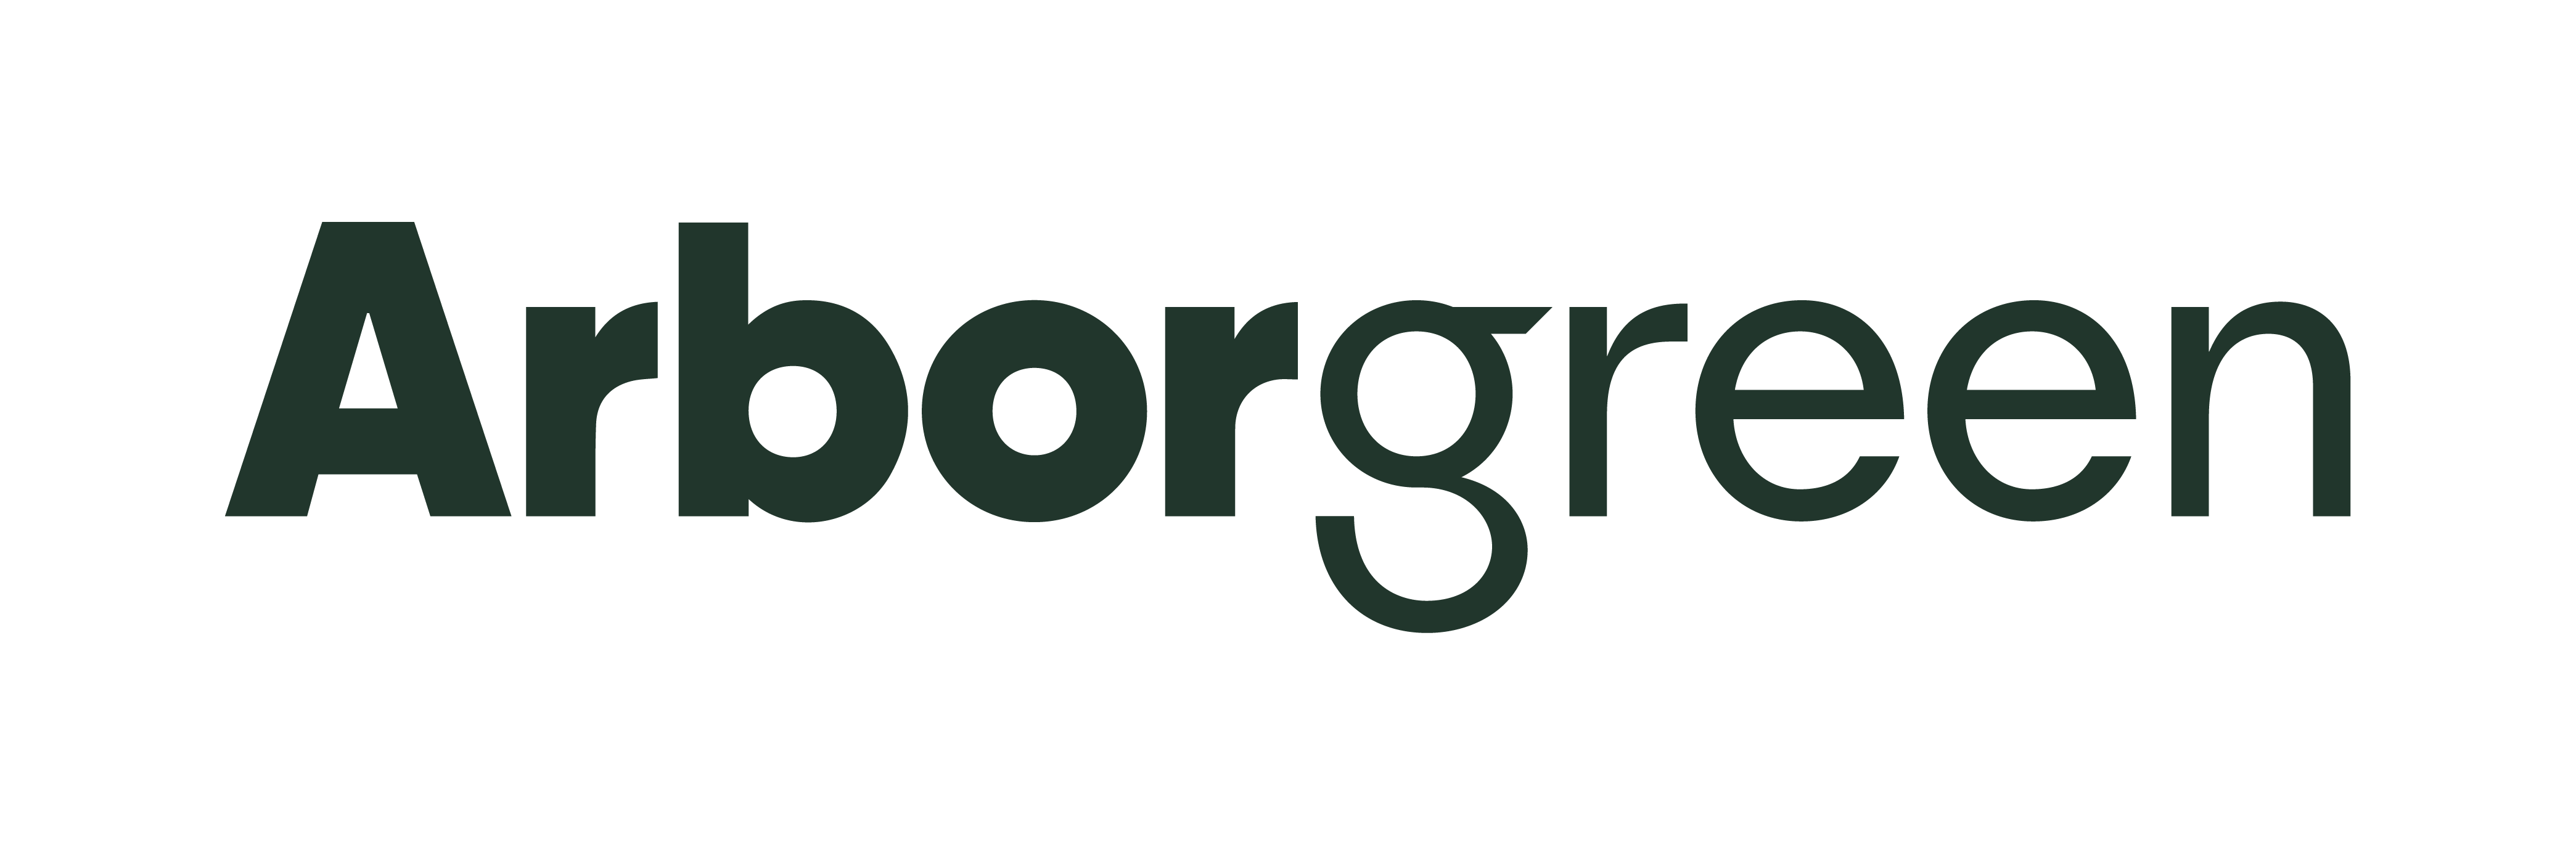 Arborgreen - DGreen - RGB - Lrg